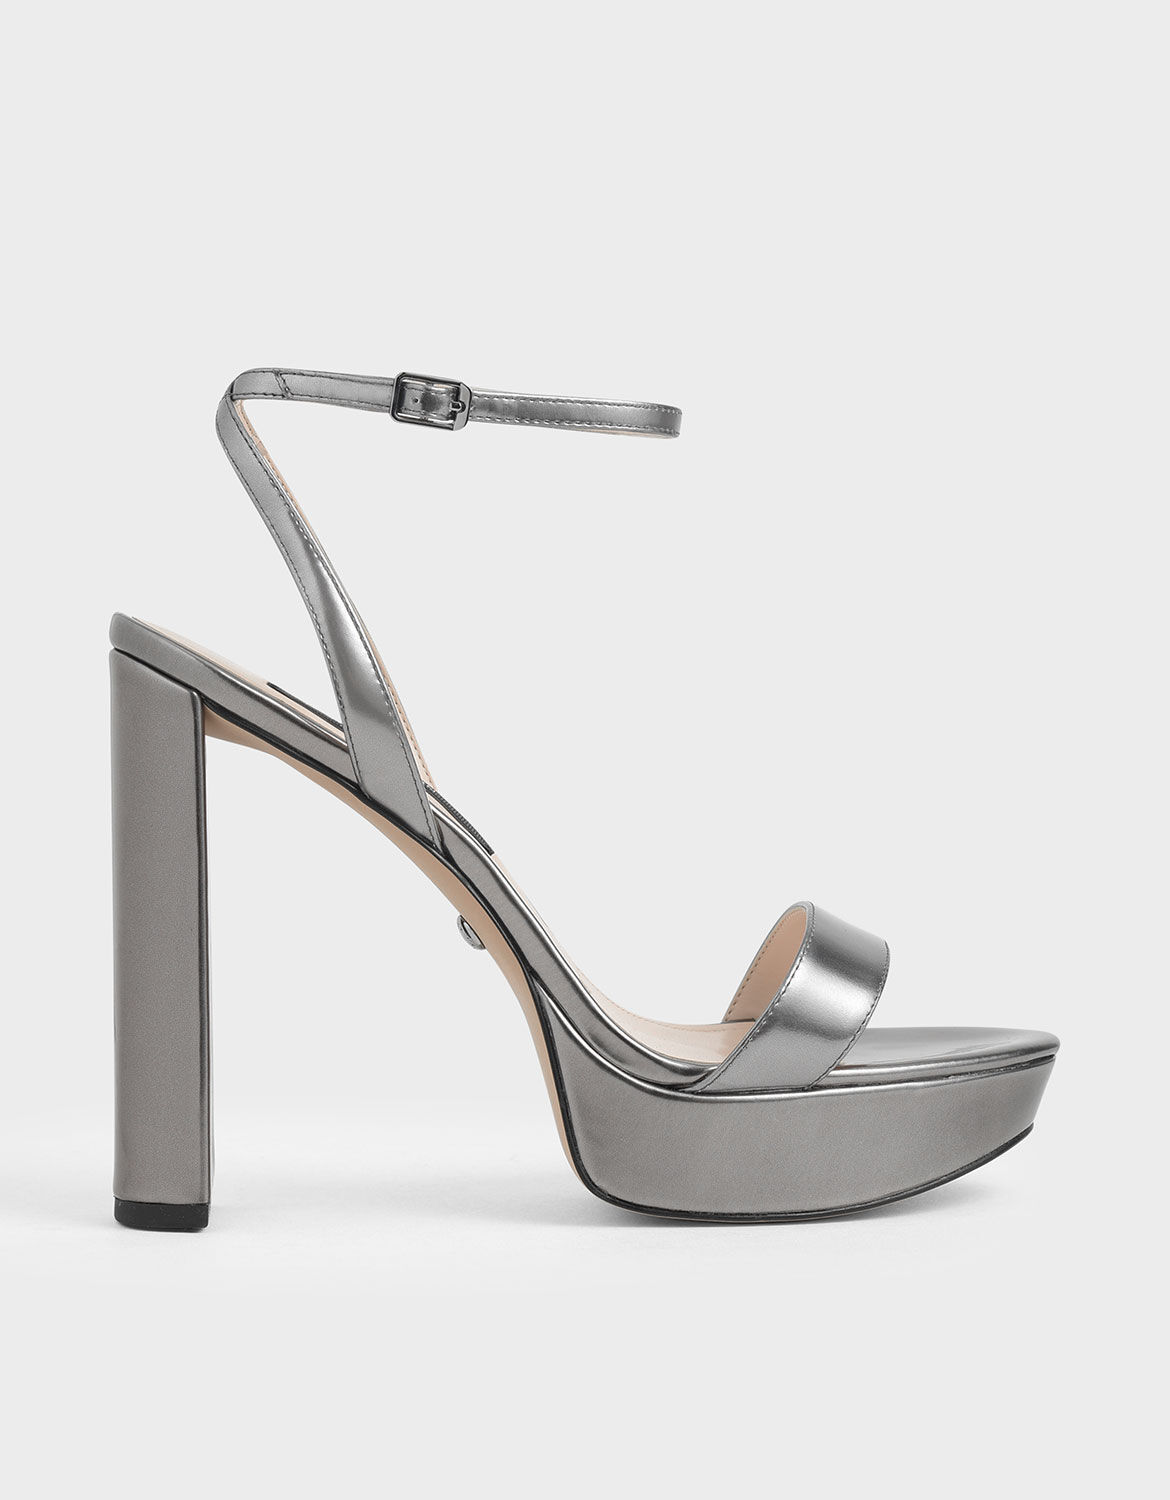 metallic silver platform sandals